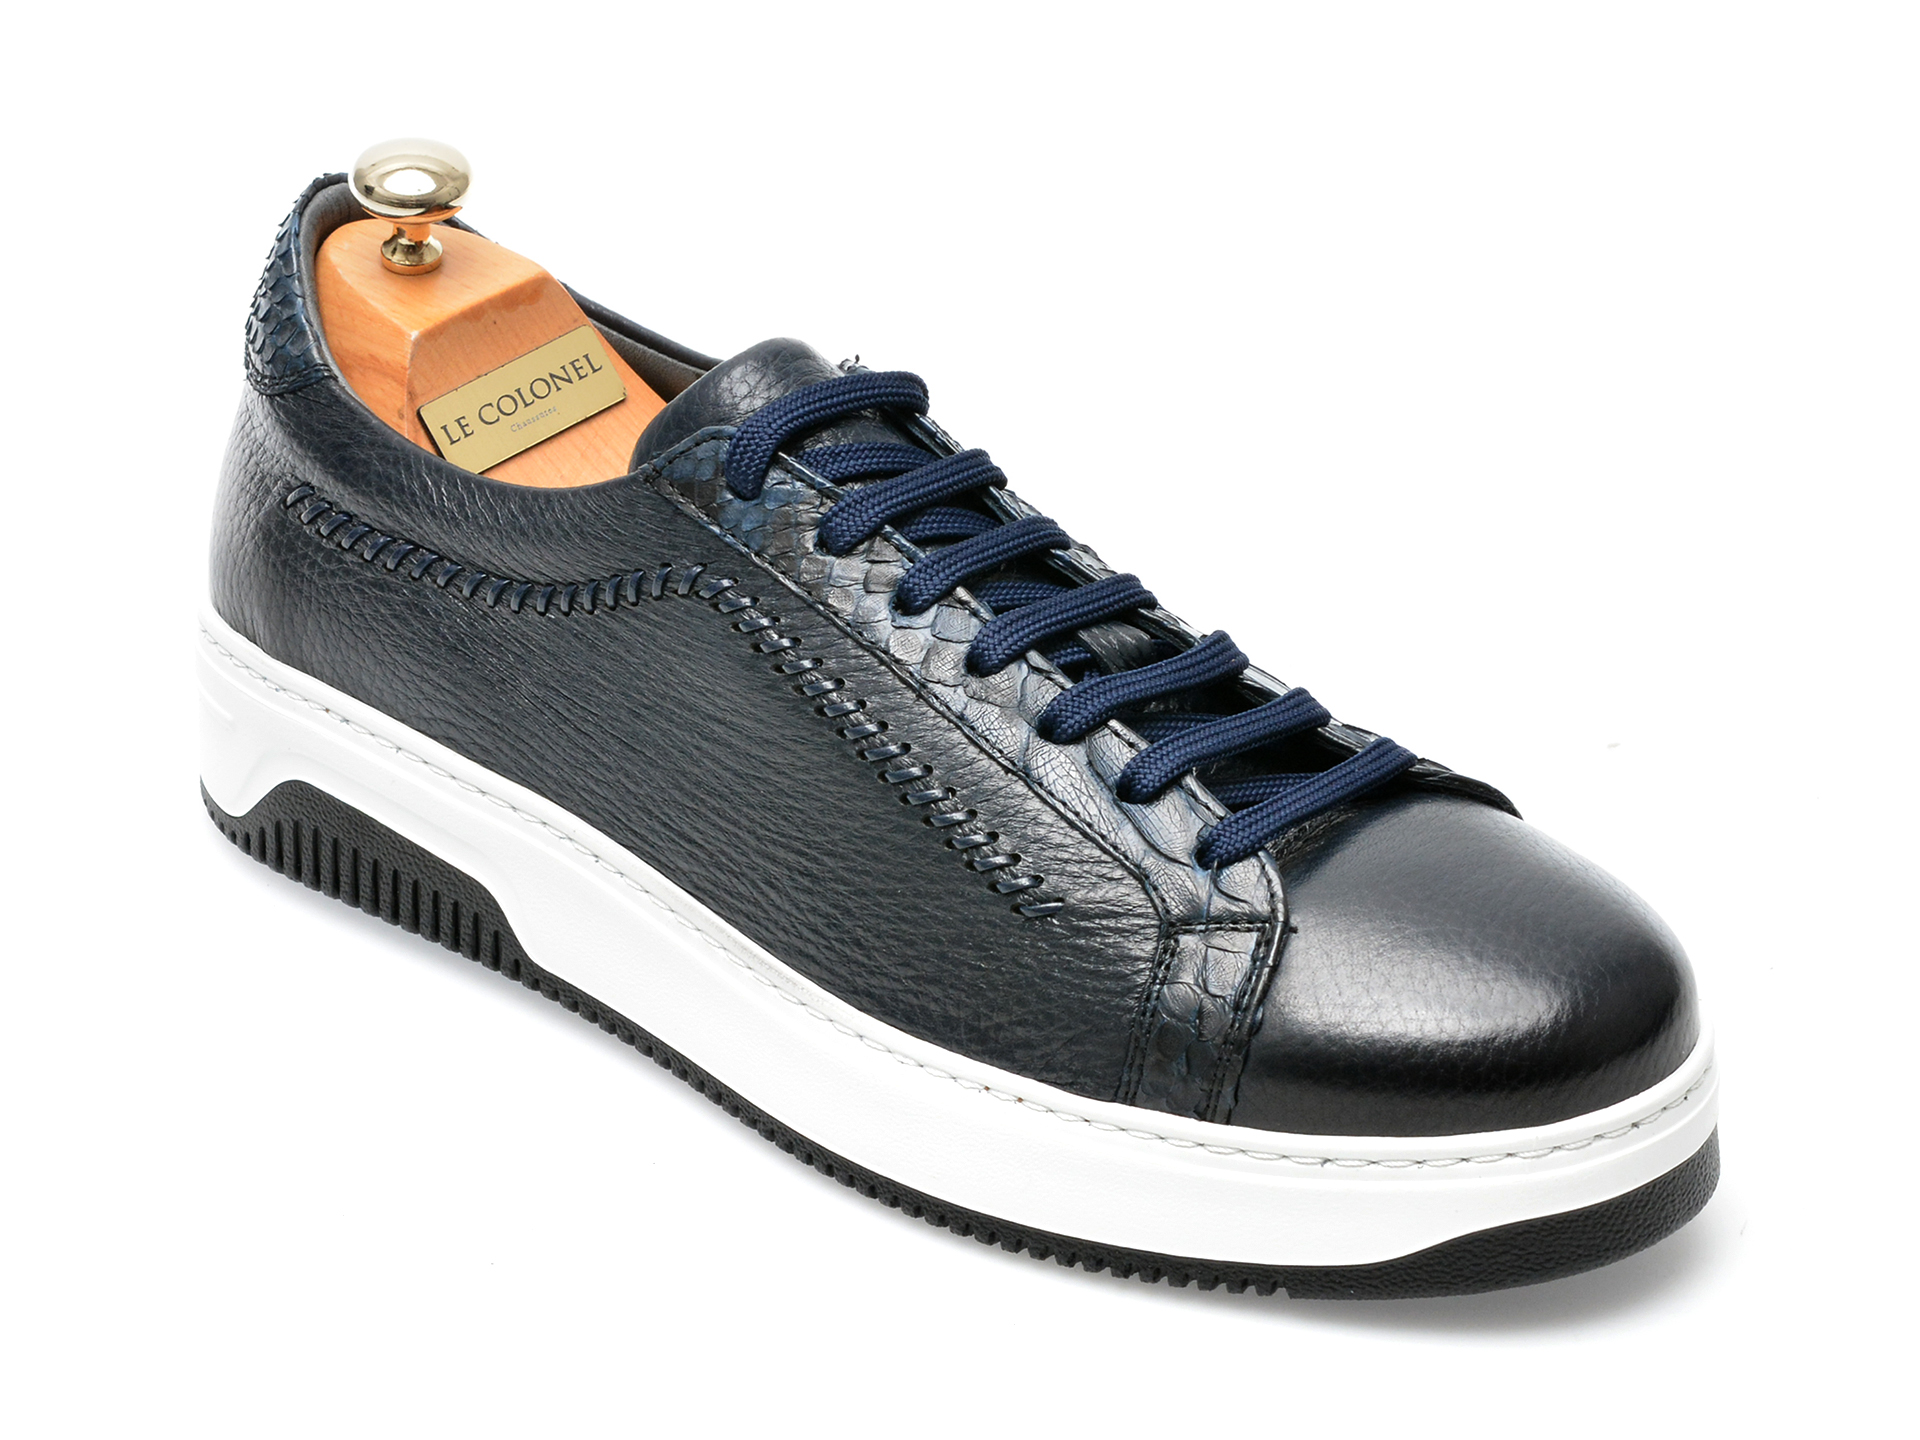 Pantofi LE COLONEL bleumarin, 63210, din piele naturala /barbati/pantofi